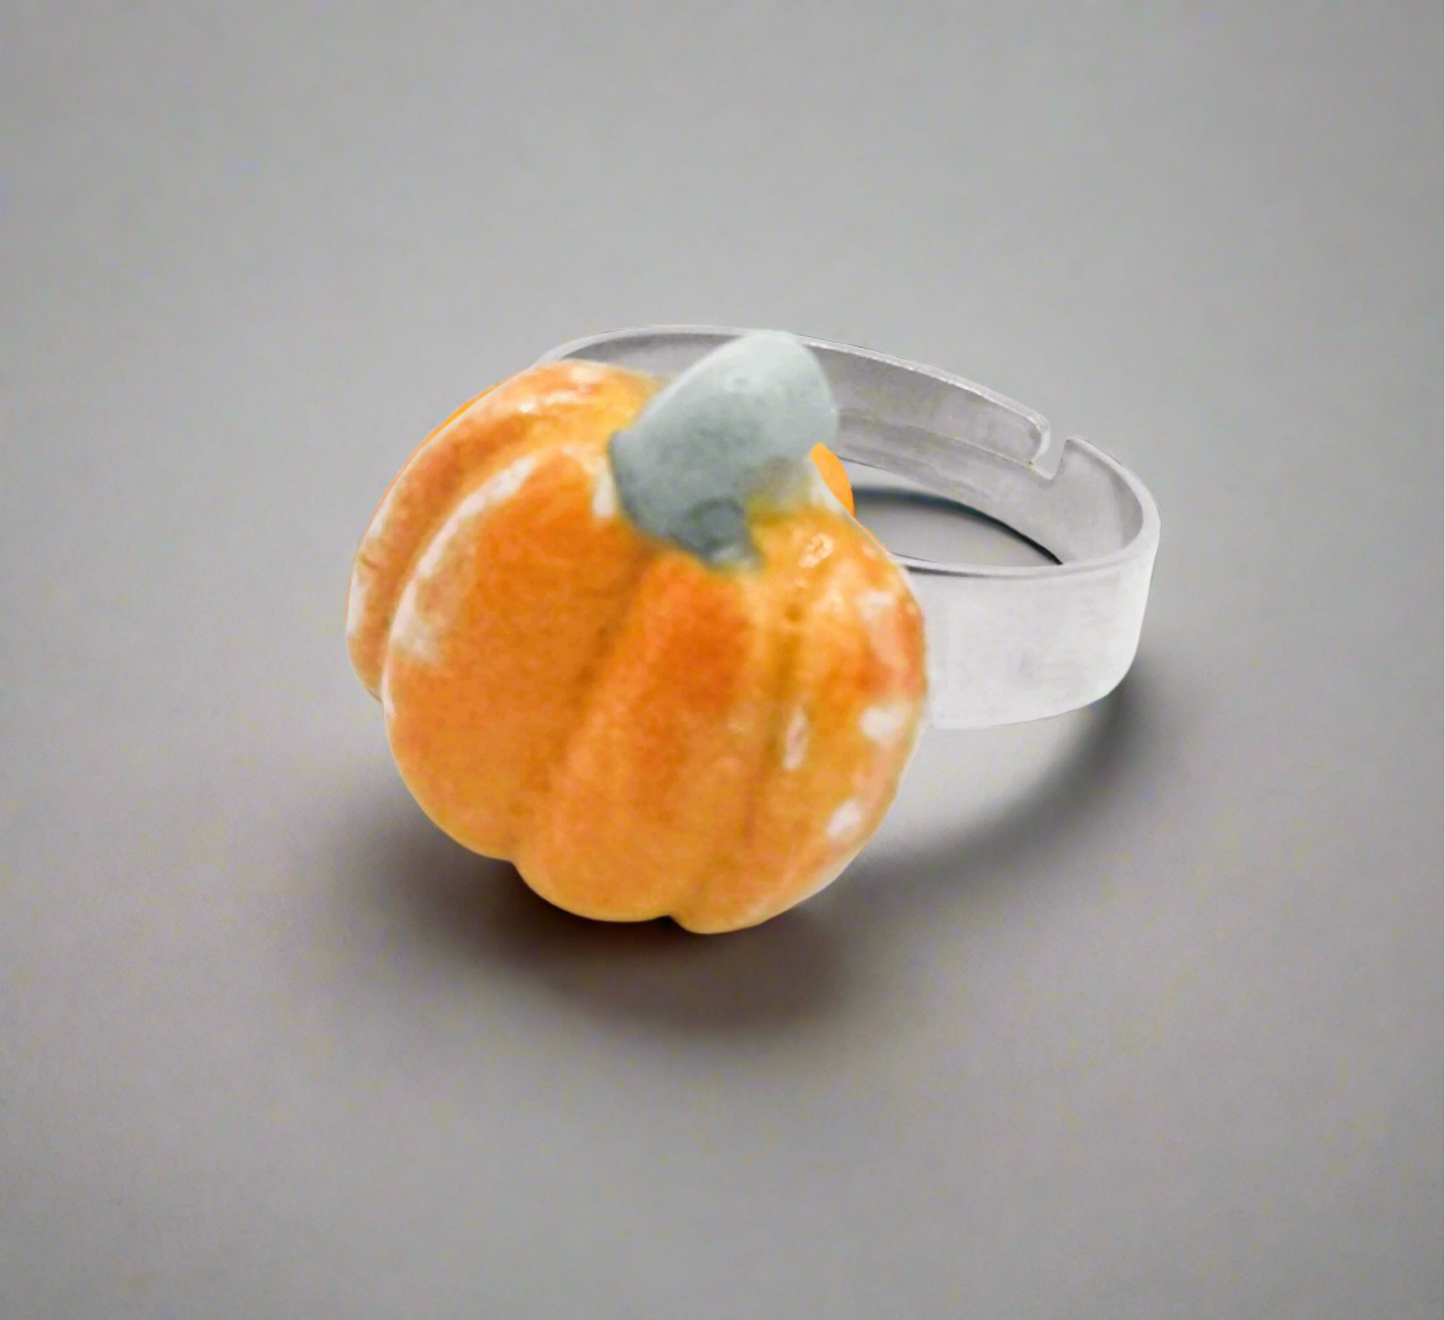 Handmade Ceramic Orange Pumpkin Statement Ring For Women, Stainless Steel Adjustable Ring For Halloween, Porcelain Fall Gifts For Her